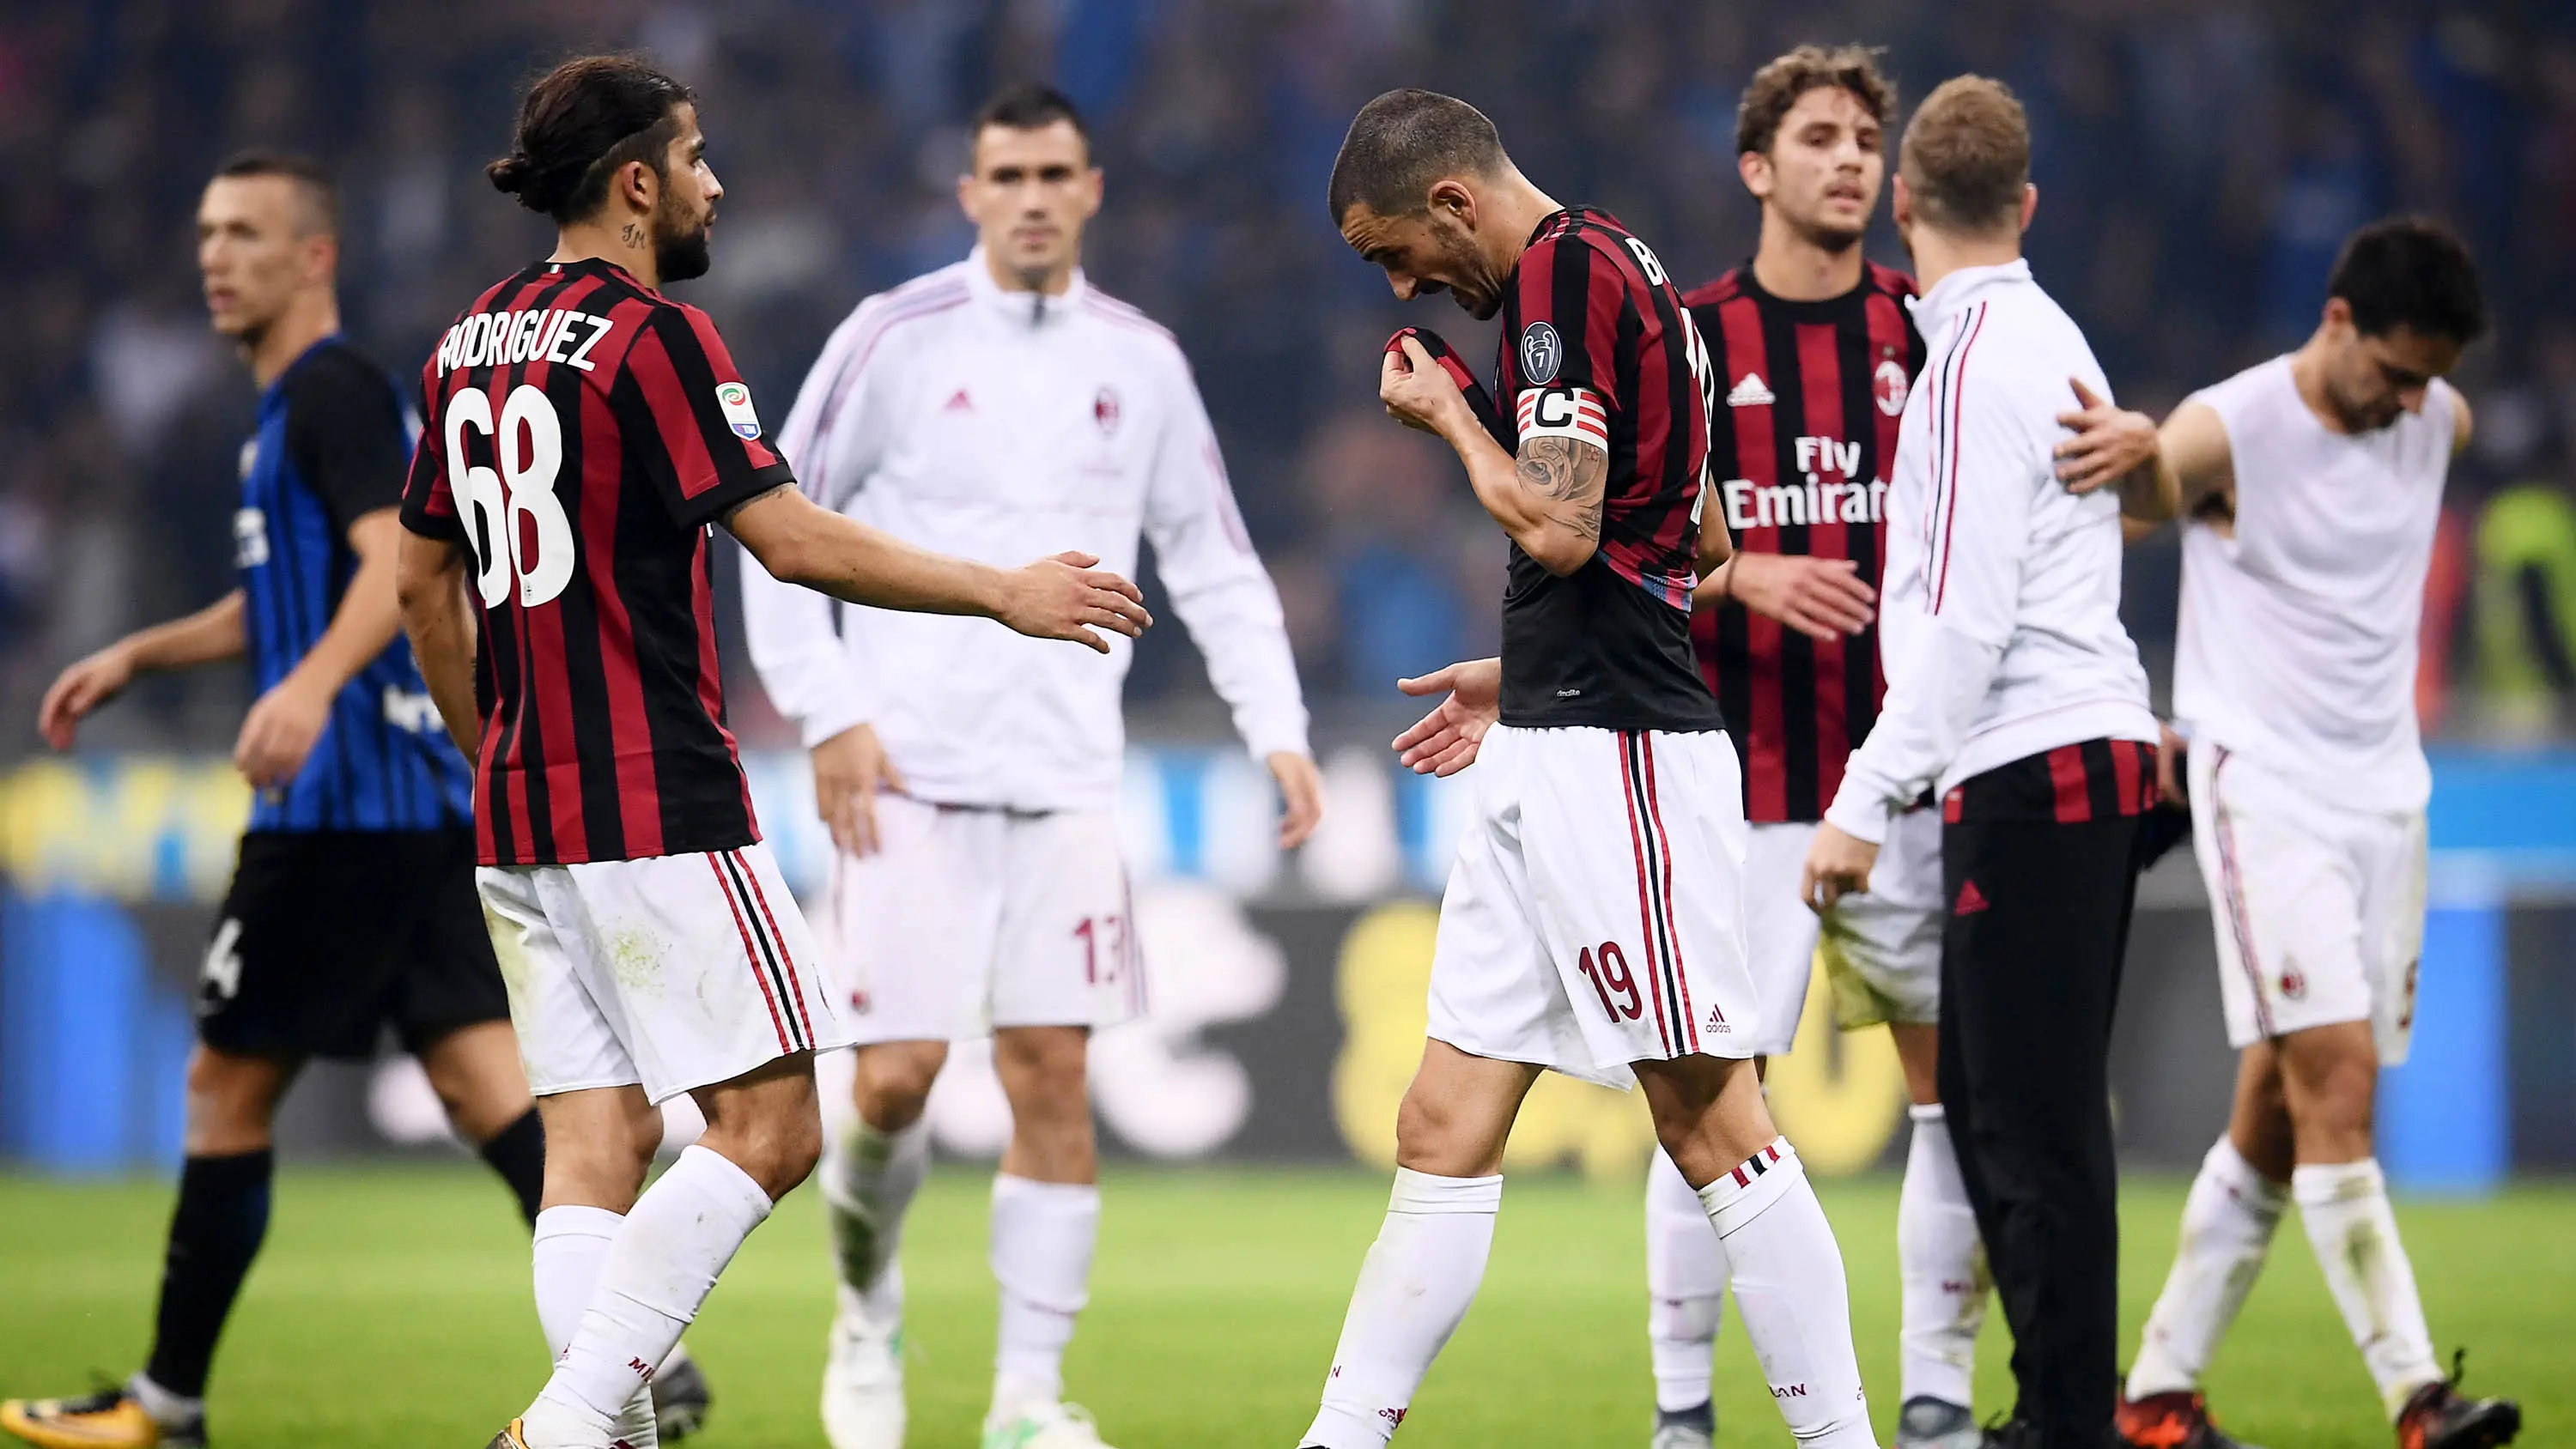 Pemain AC Milan tampak lesu usai ditaklukkan Inter Milan. (AFP/Miguel Medina)